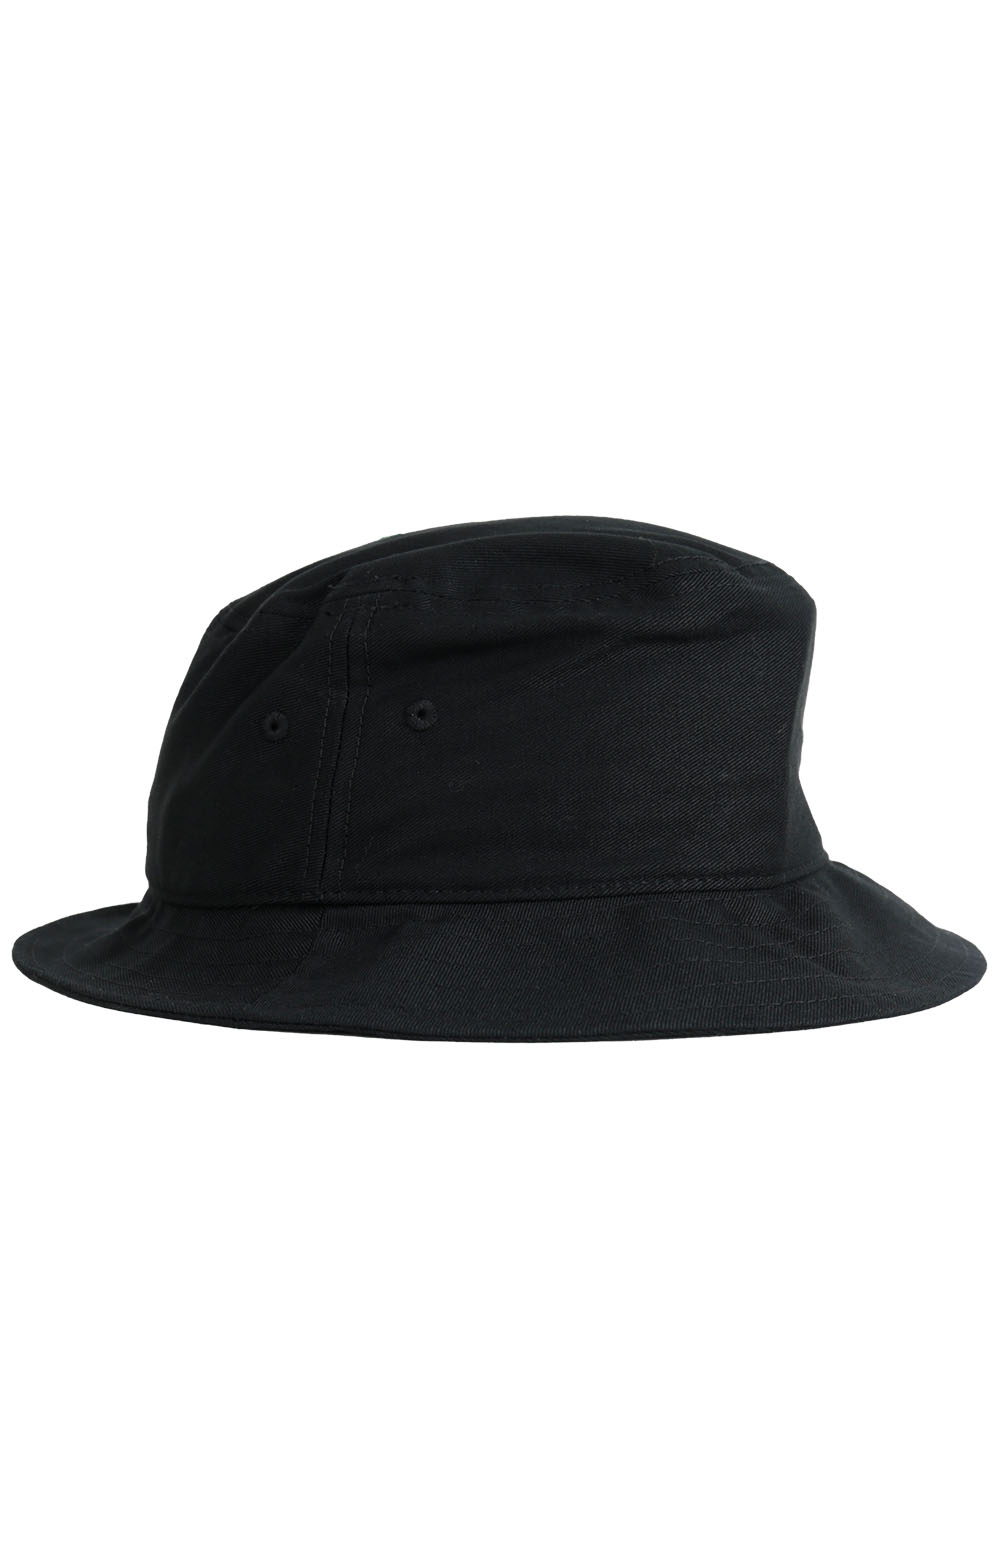 Patch Bucket Hat - Black